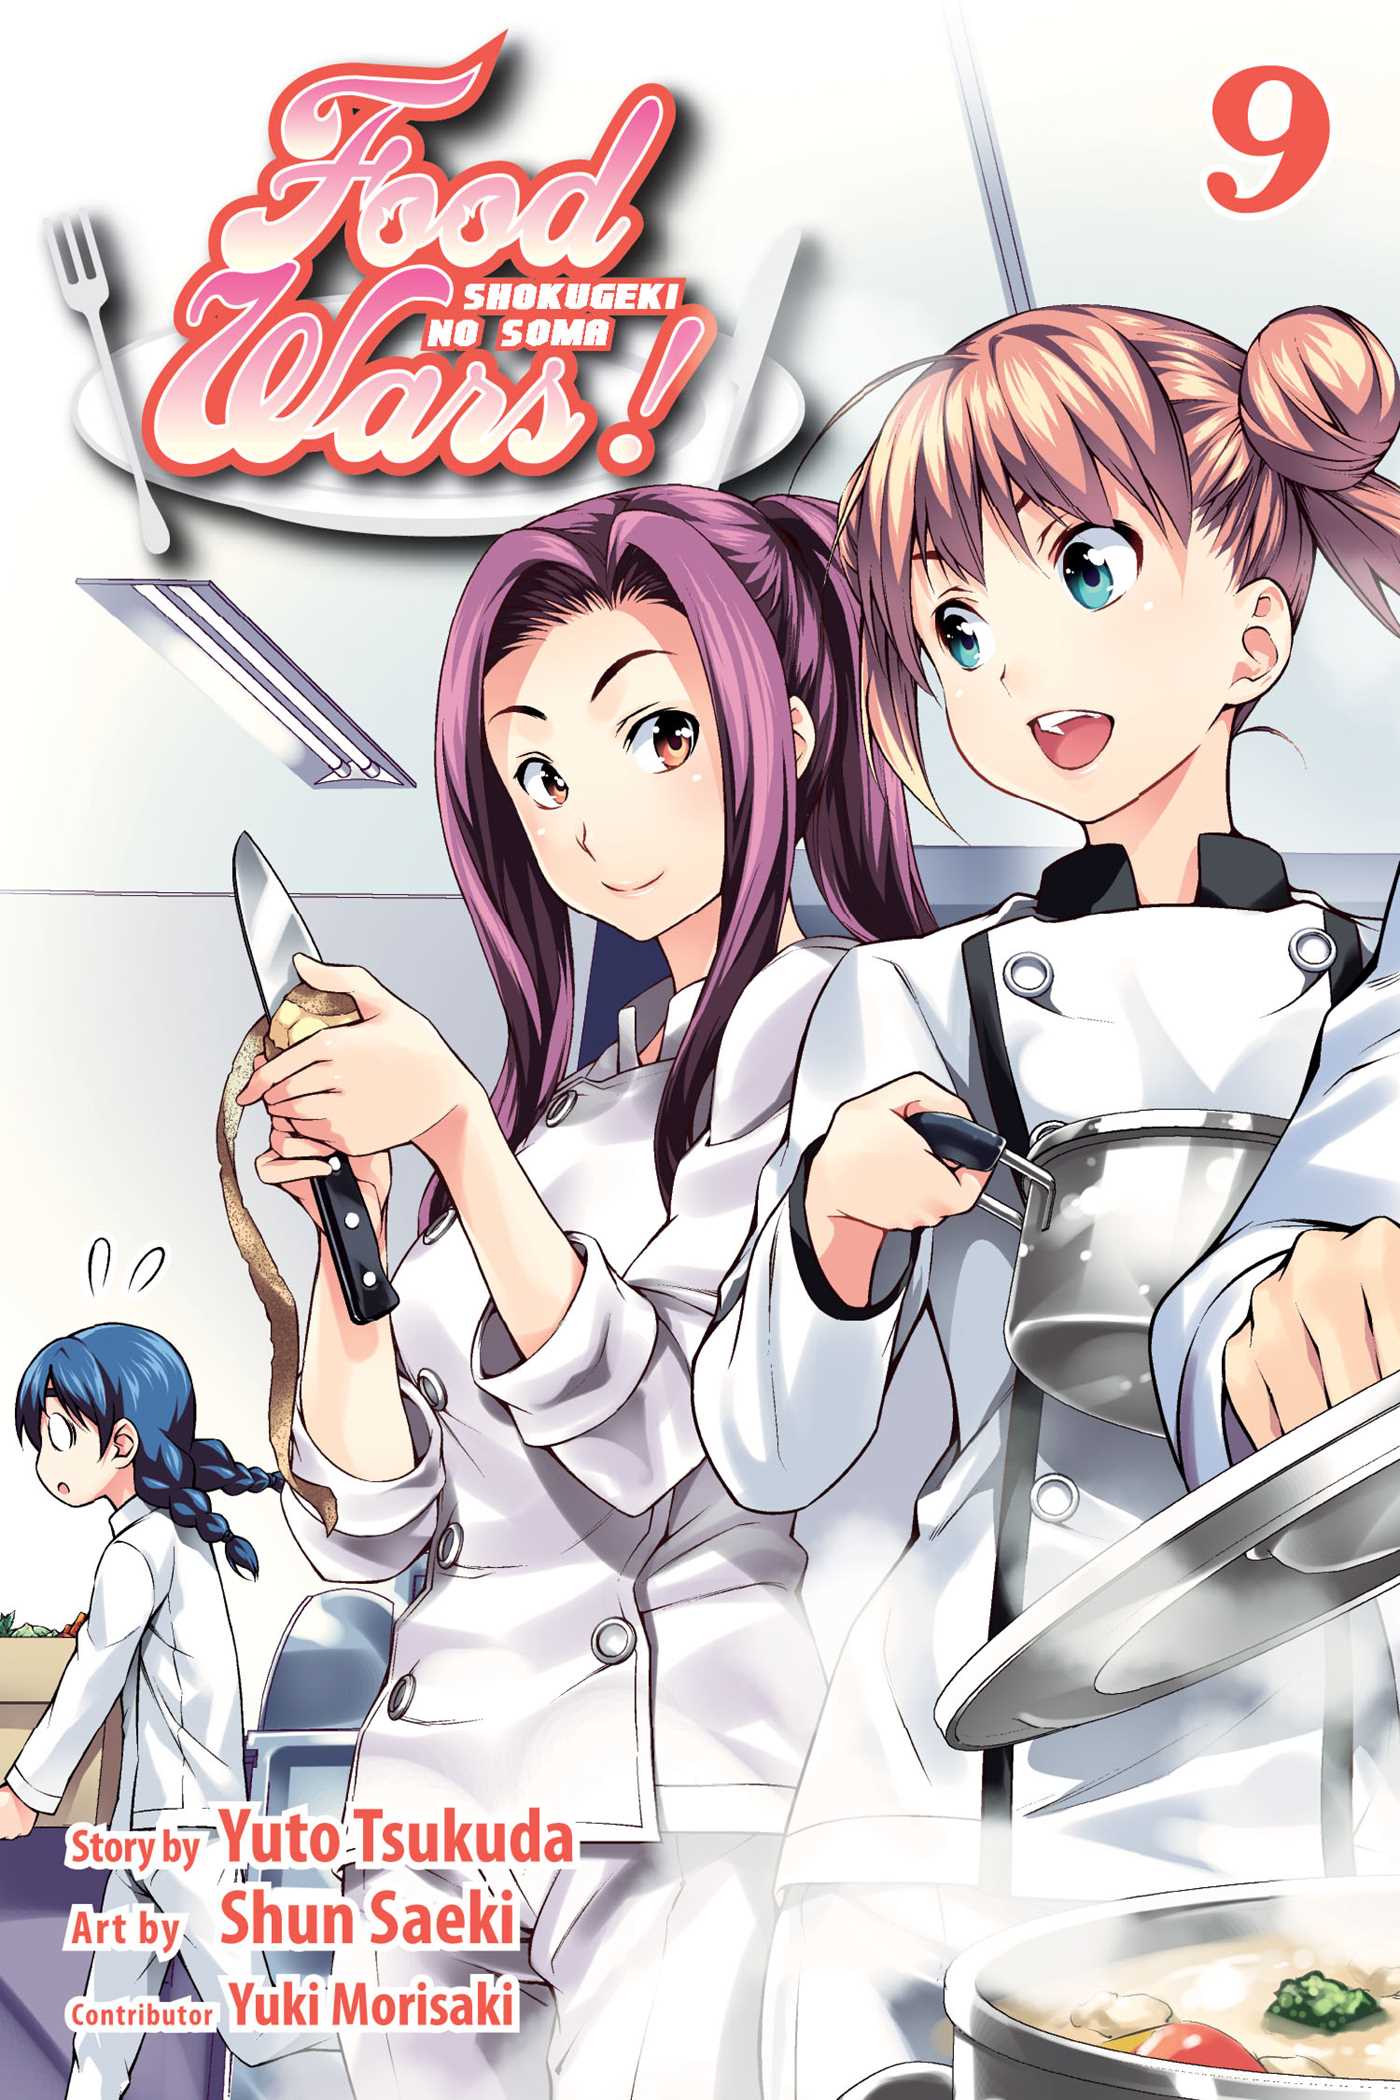 Food Wars!: Shokugeki no Soma, Vol. 9